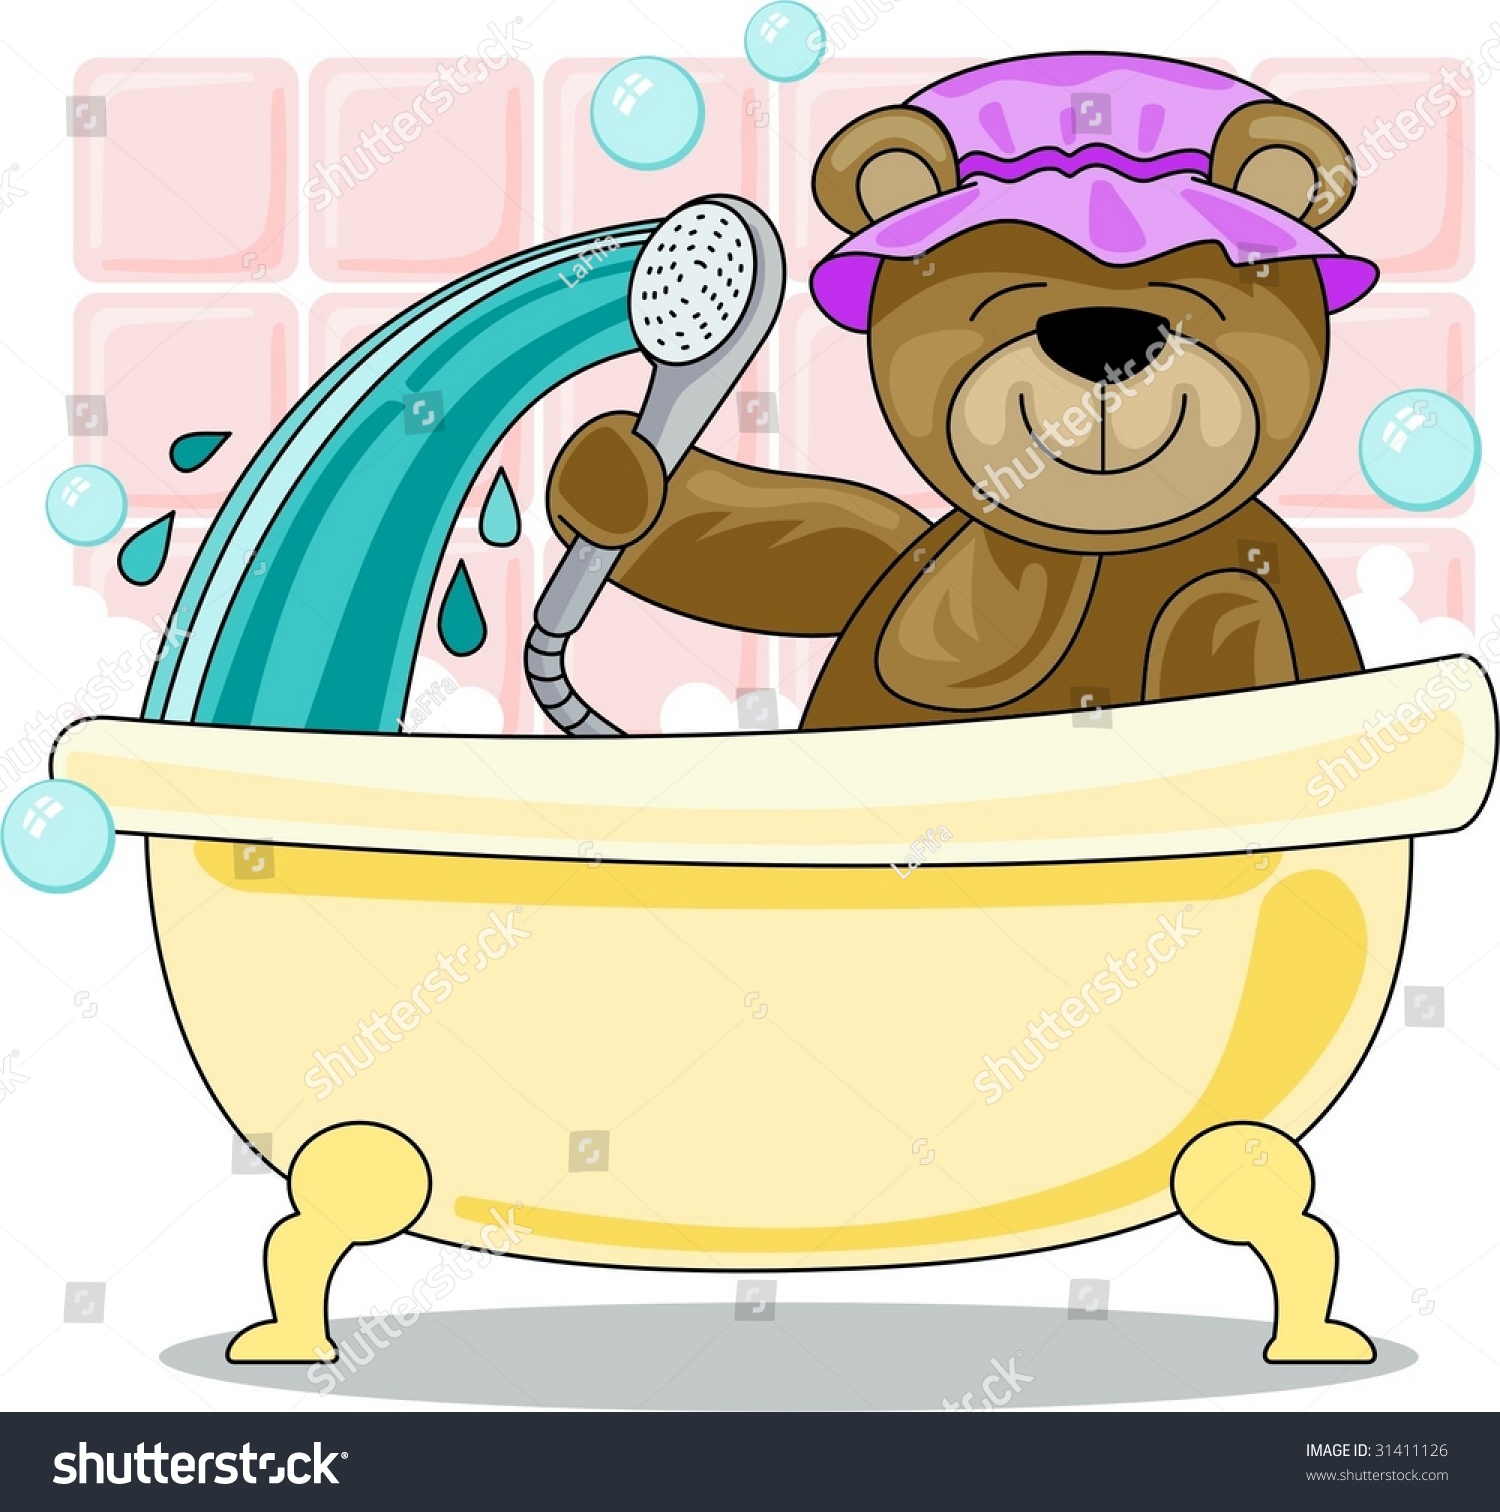 teddy bear shower